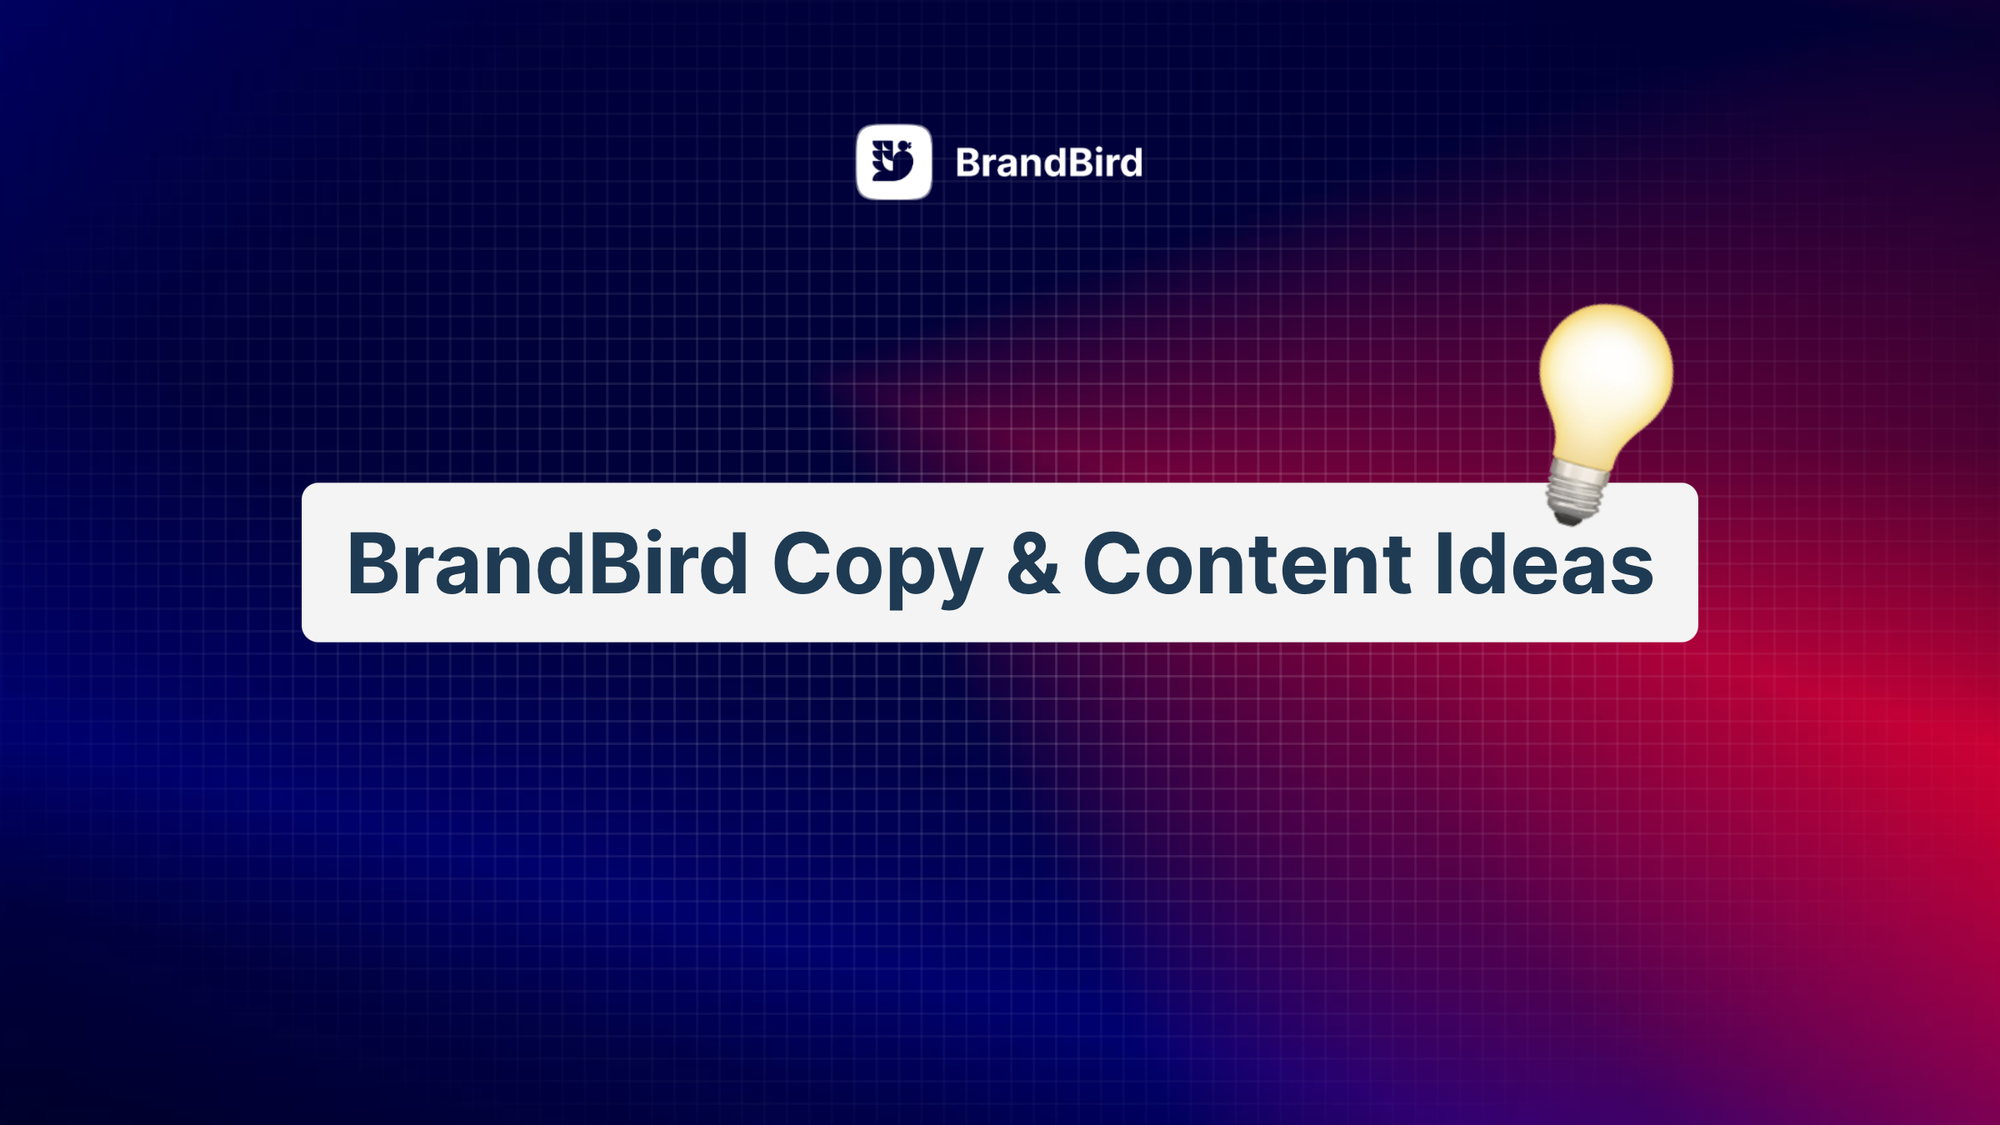 Content & copy ideas to promote BrandBird